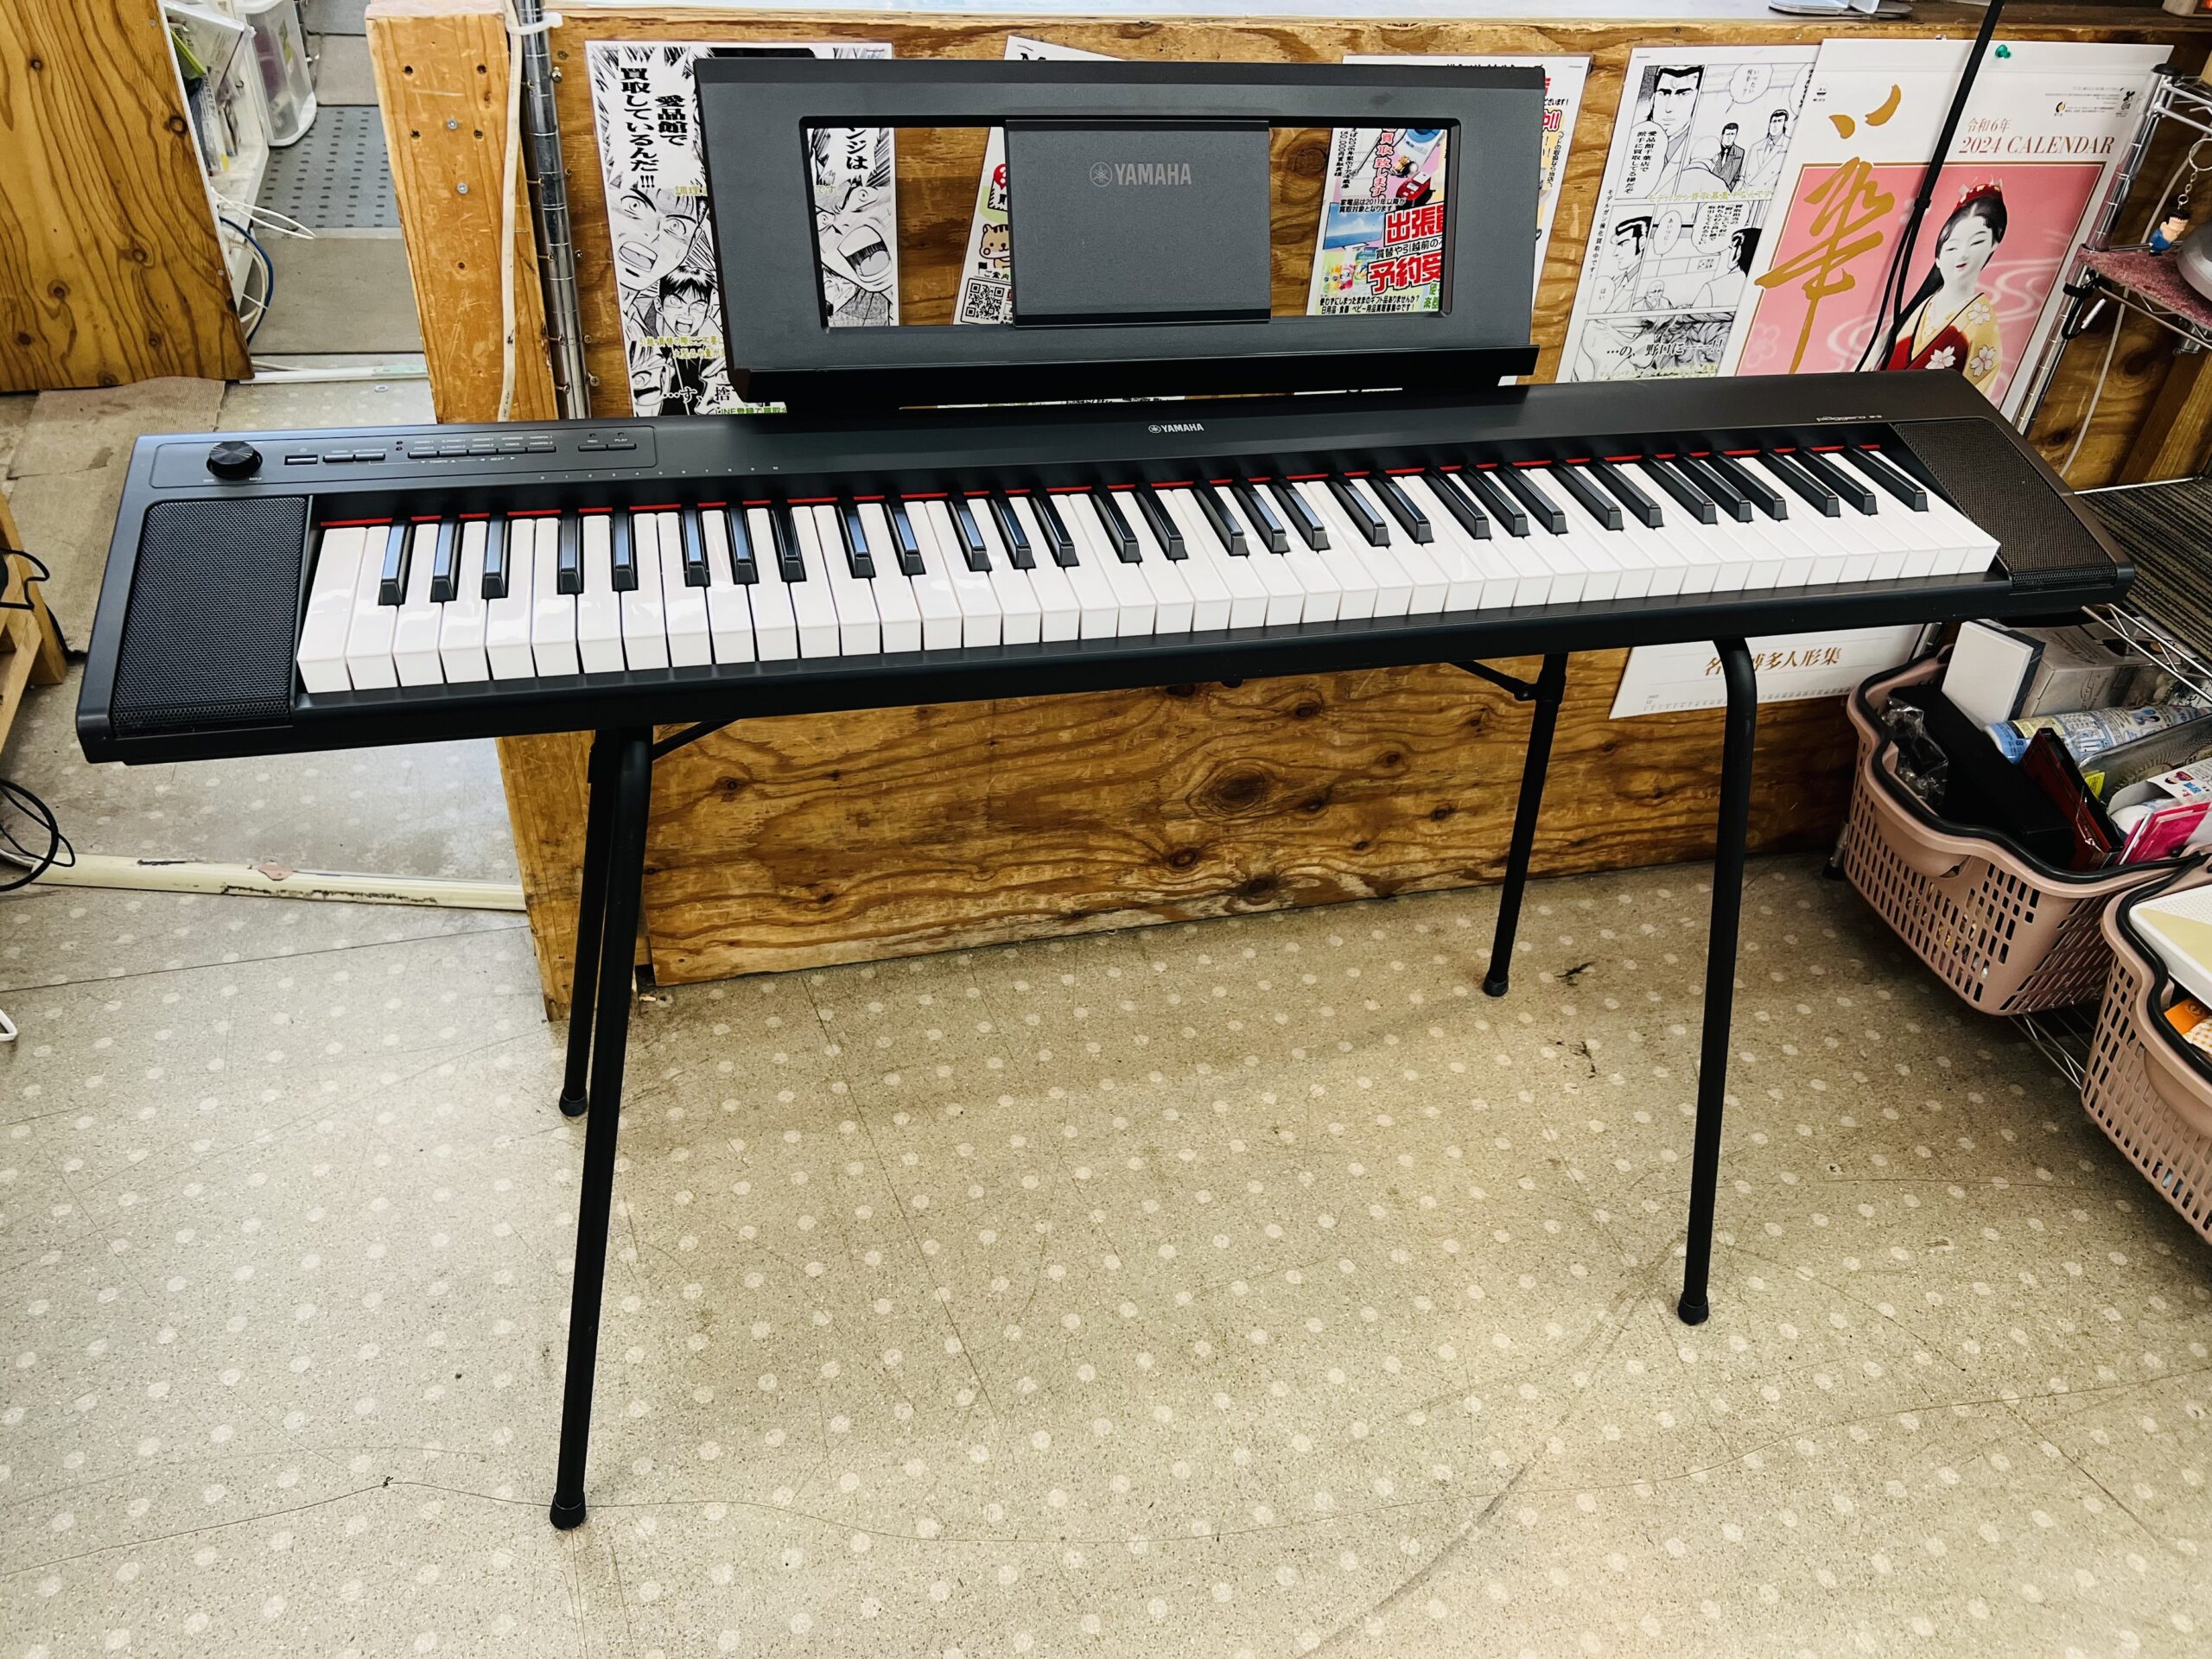 YAMAHA ピアジェーロ NP32 19年製 電子ピアノ、キーボード - 鍵盤楽器